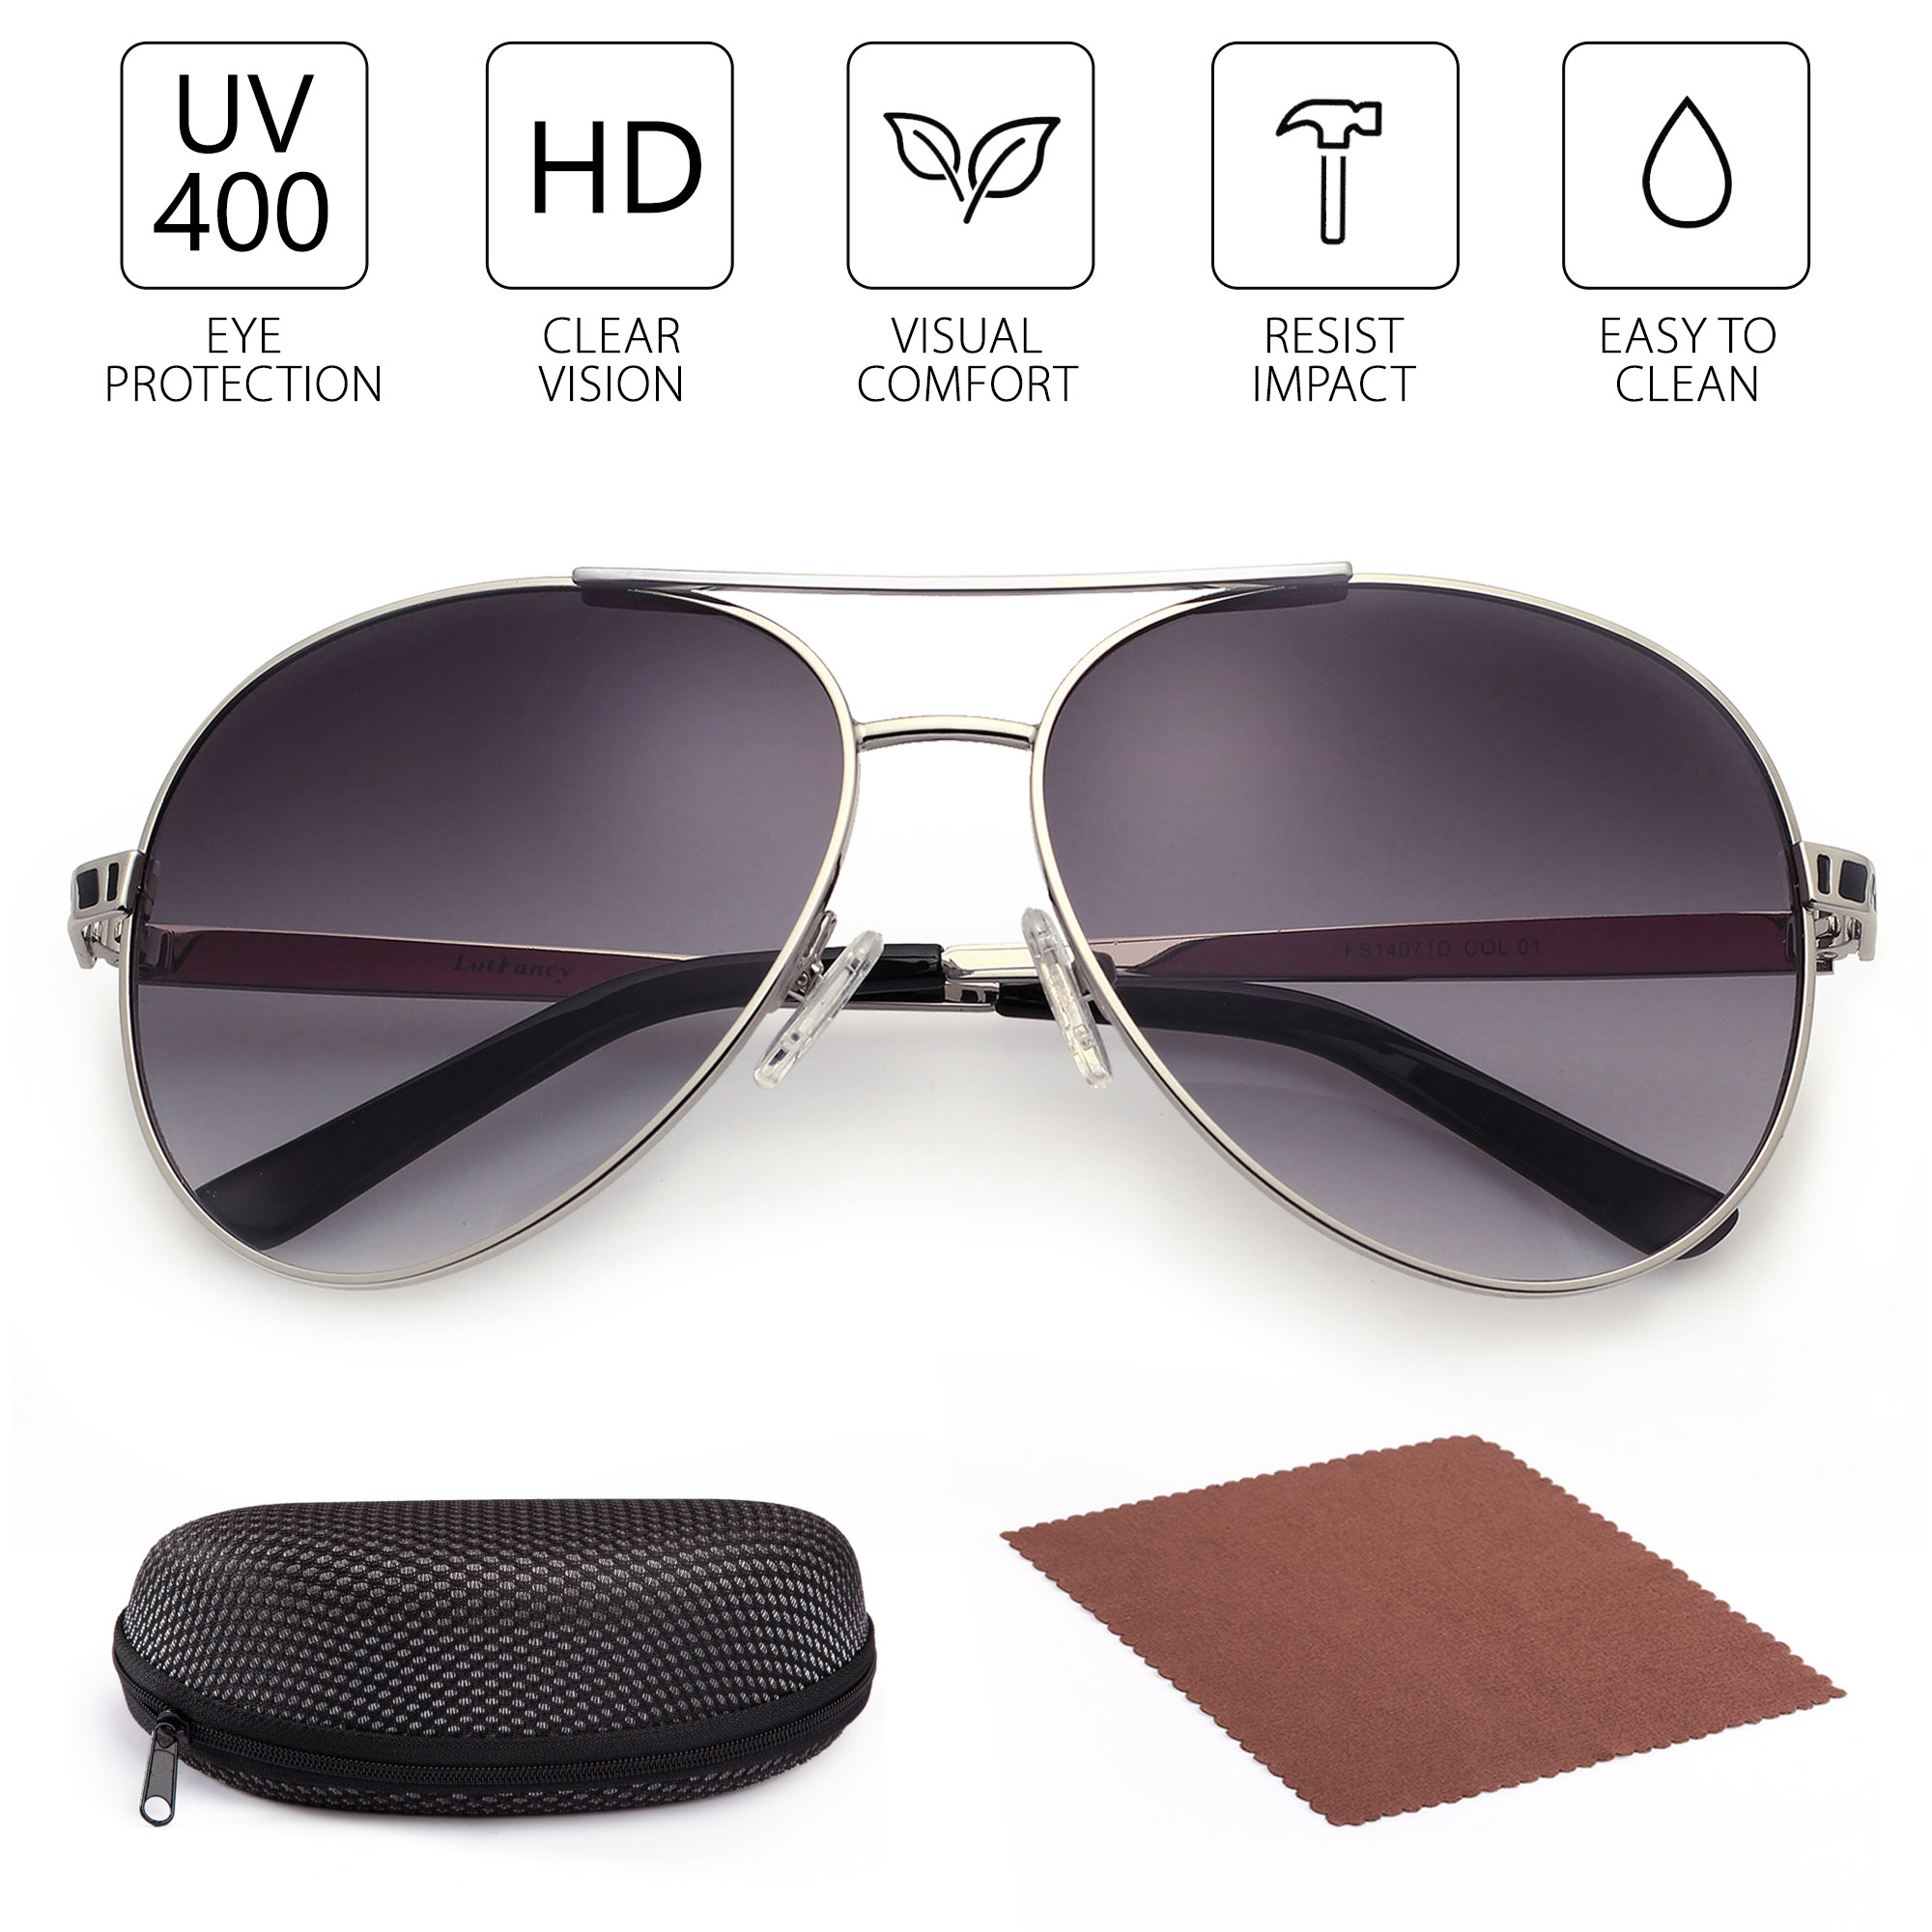 LotFancy Women's Aviator Sunglasses, Ultra Lightweight,UV400 Protection,Light Gray - image 3 of 7